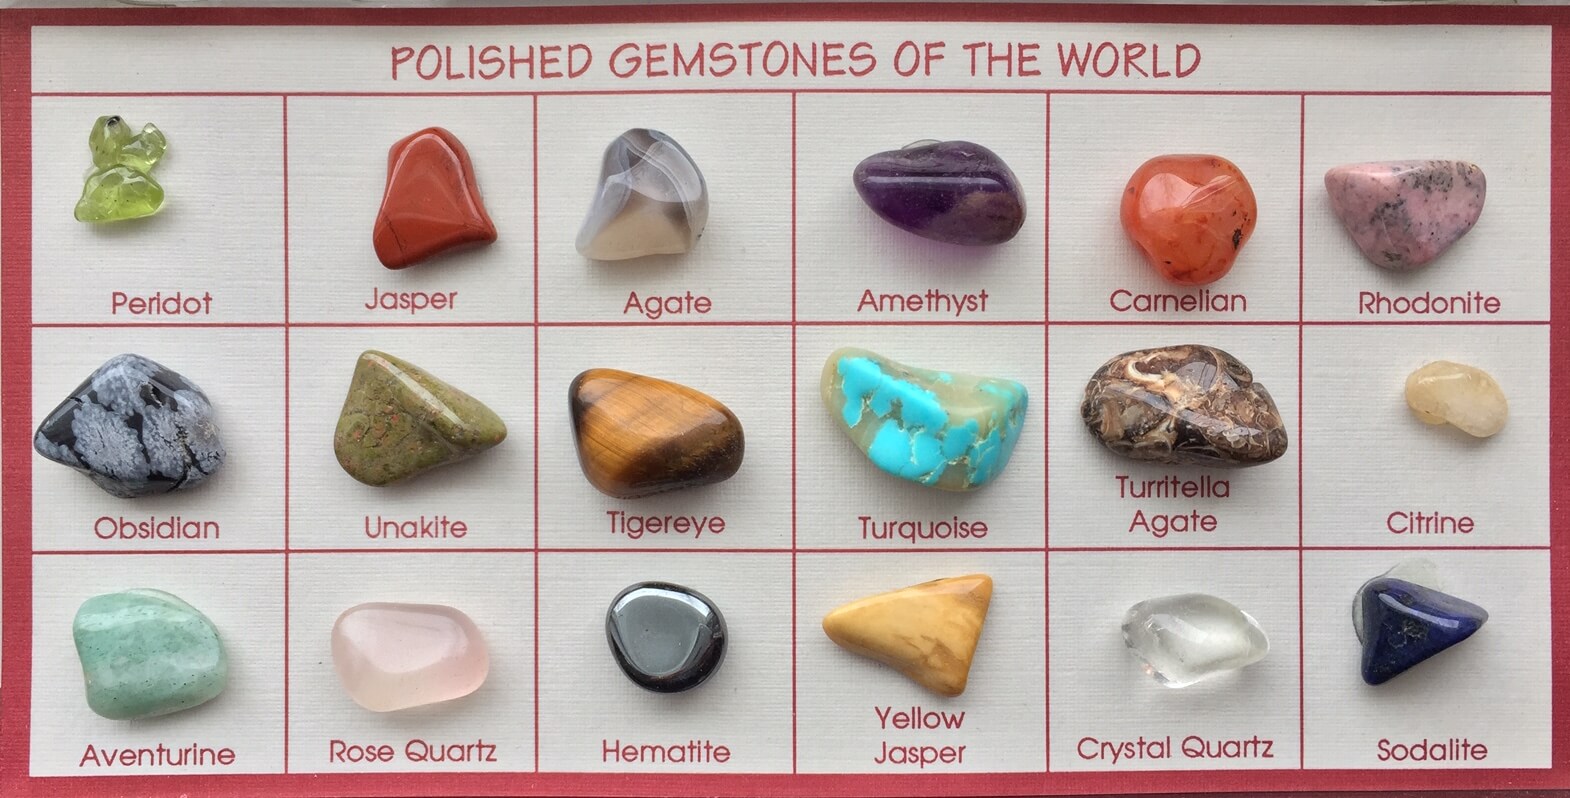 Polished gems